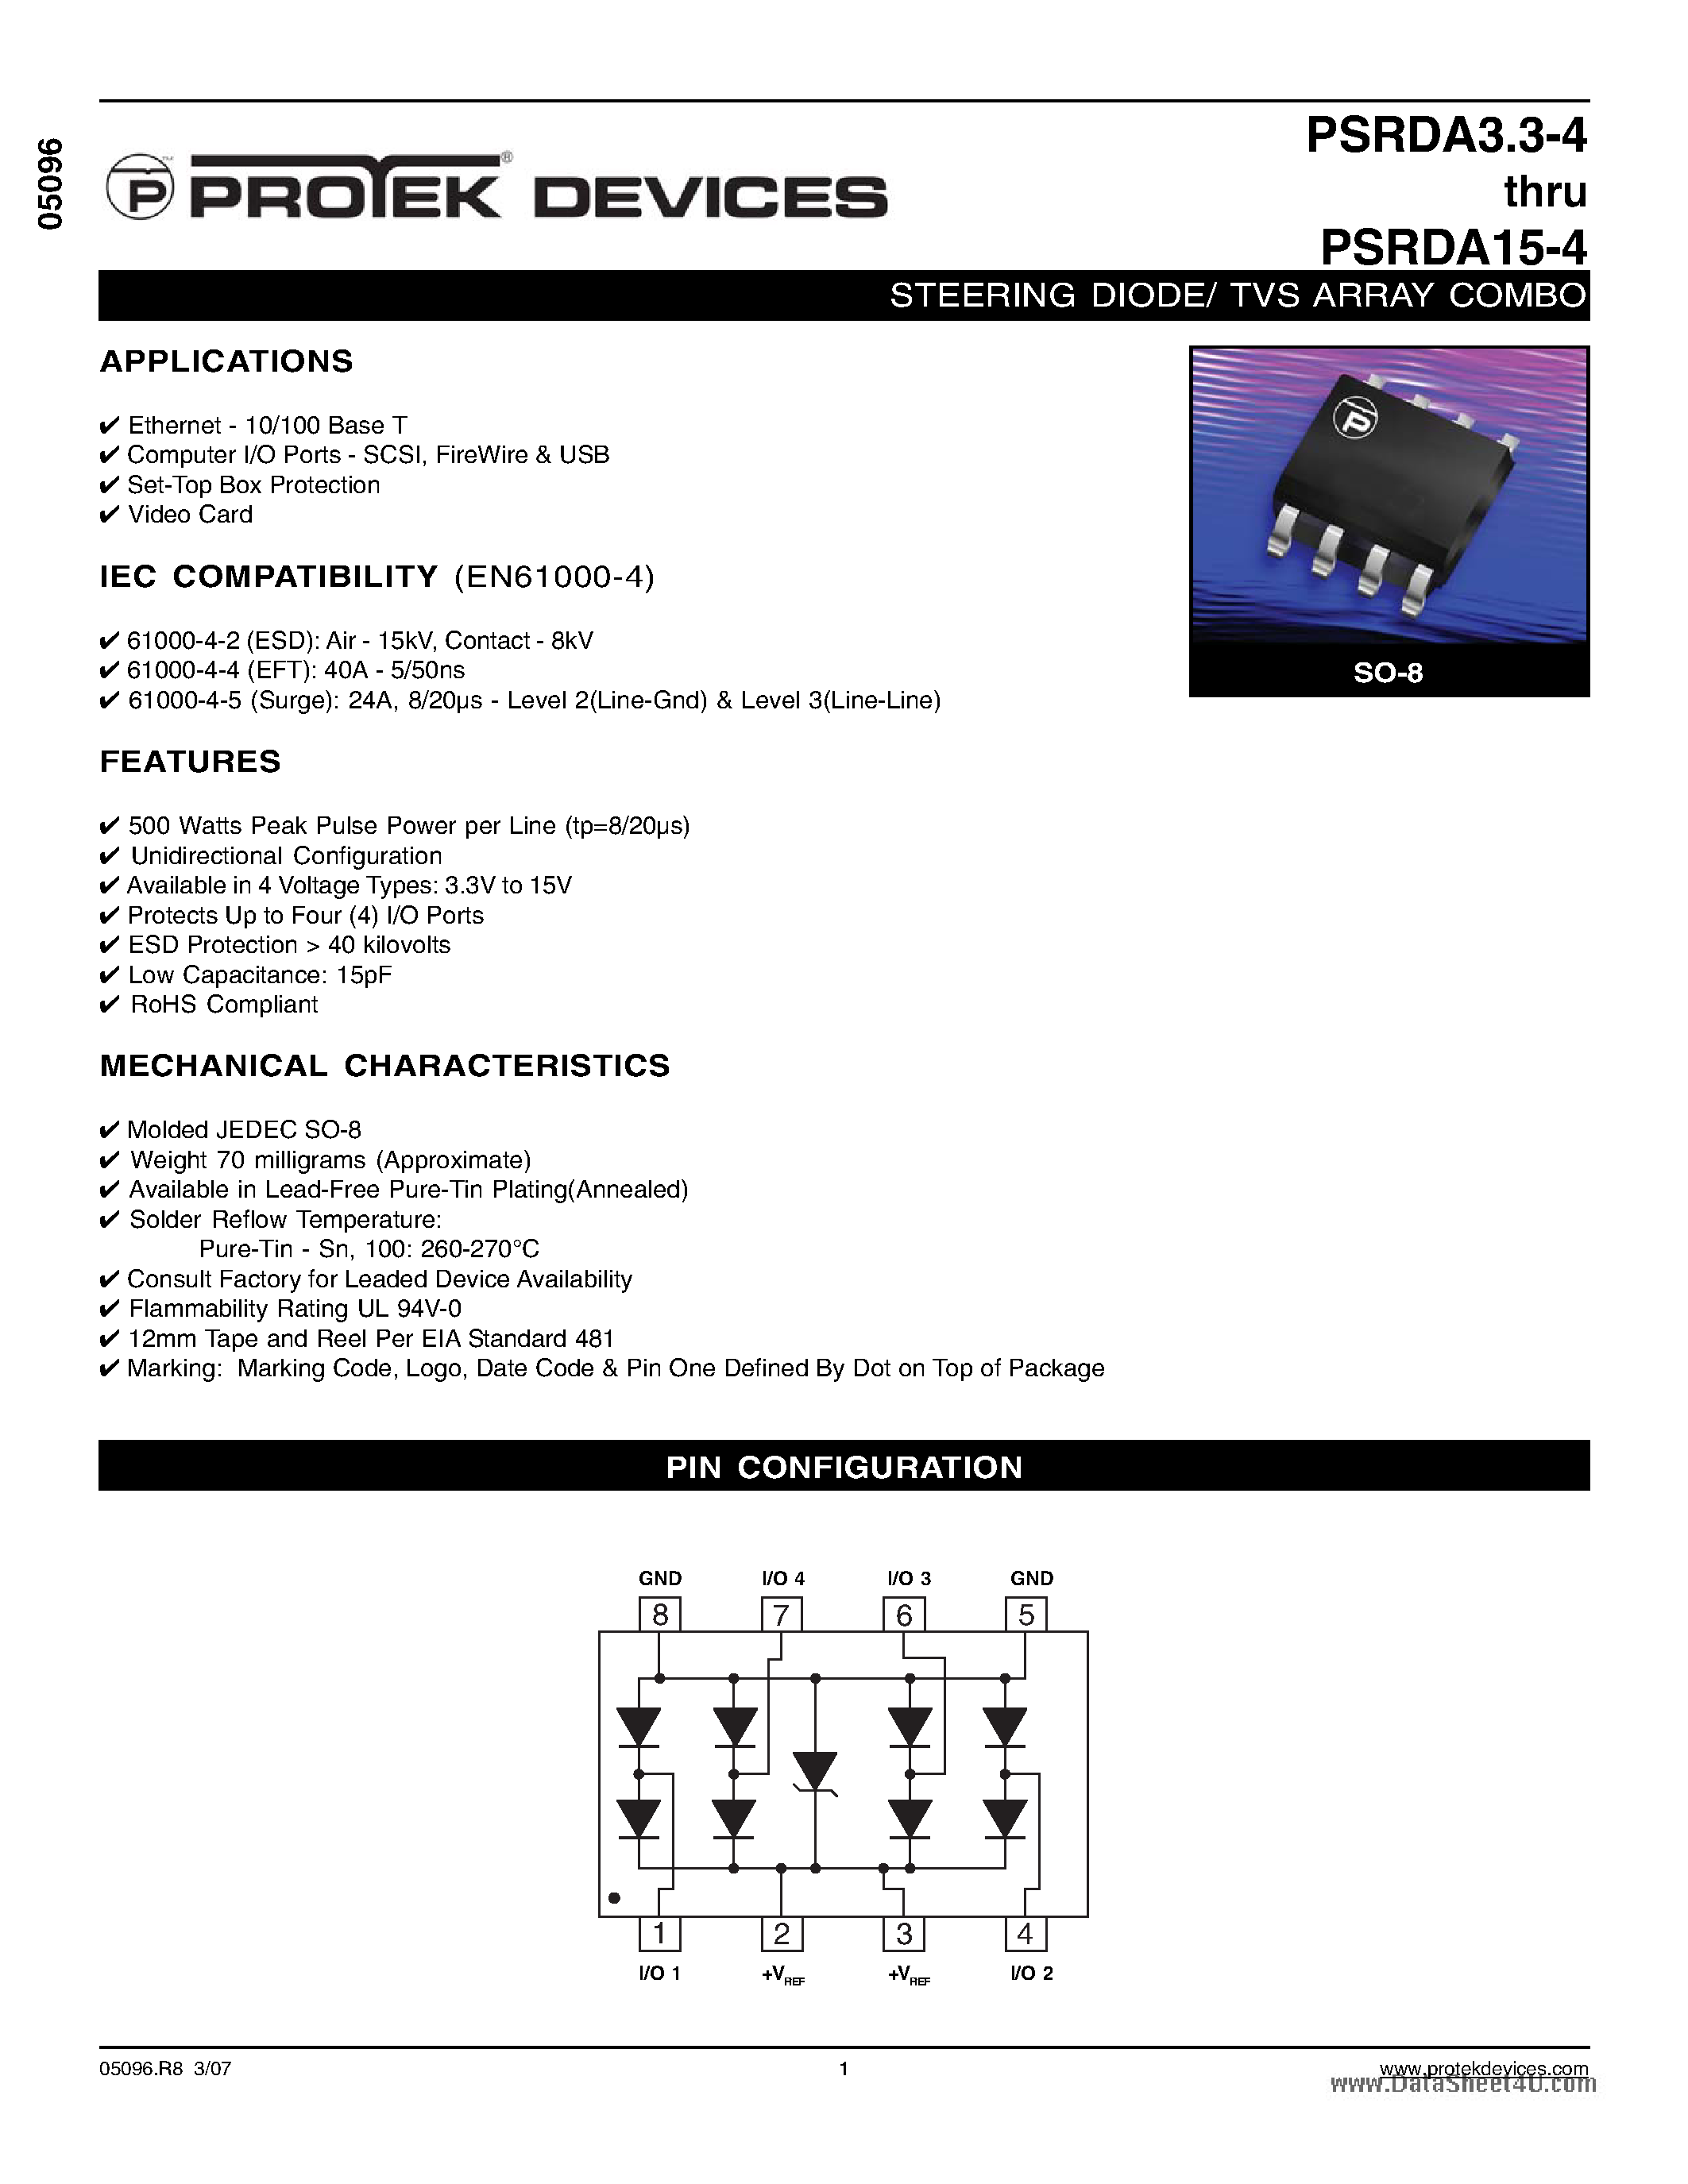 Datasheet PSRDA12-4 - (PSRDA3.3-4 - PSRDA15-4) STEERING DIODE/ TVS ARRAY COMBO page 1